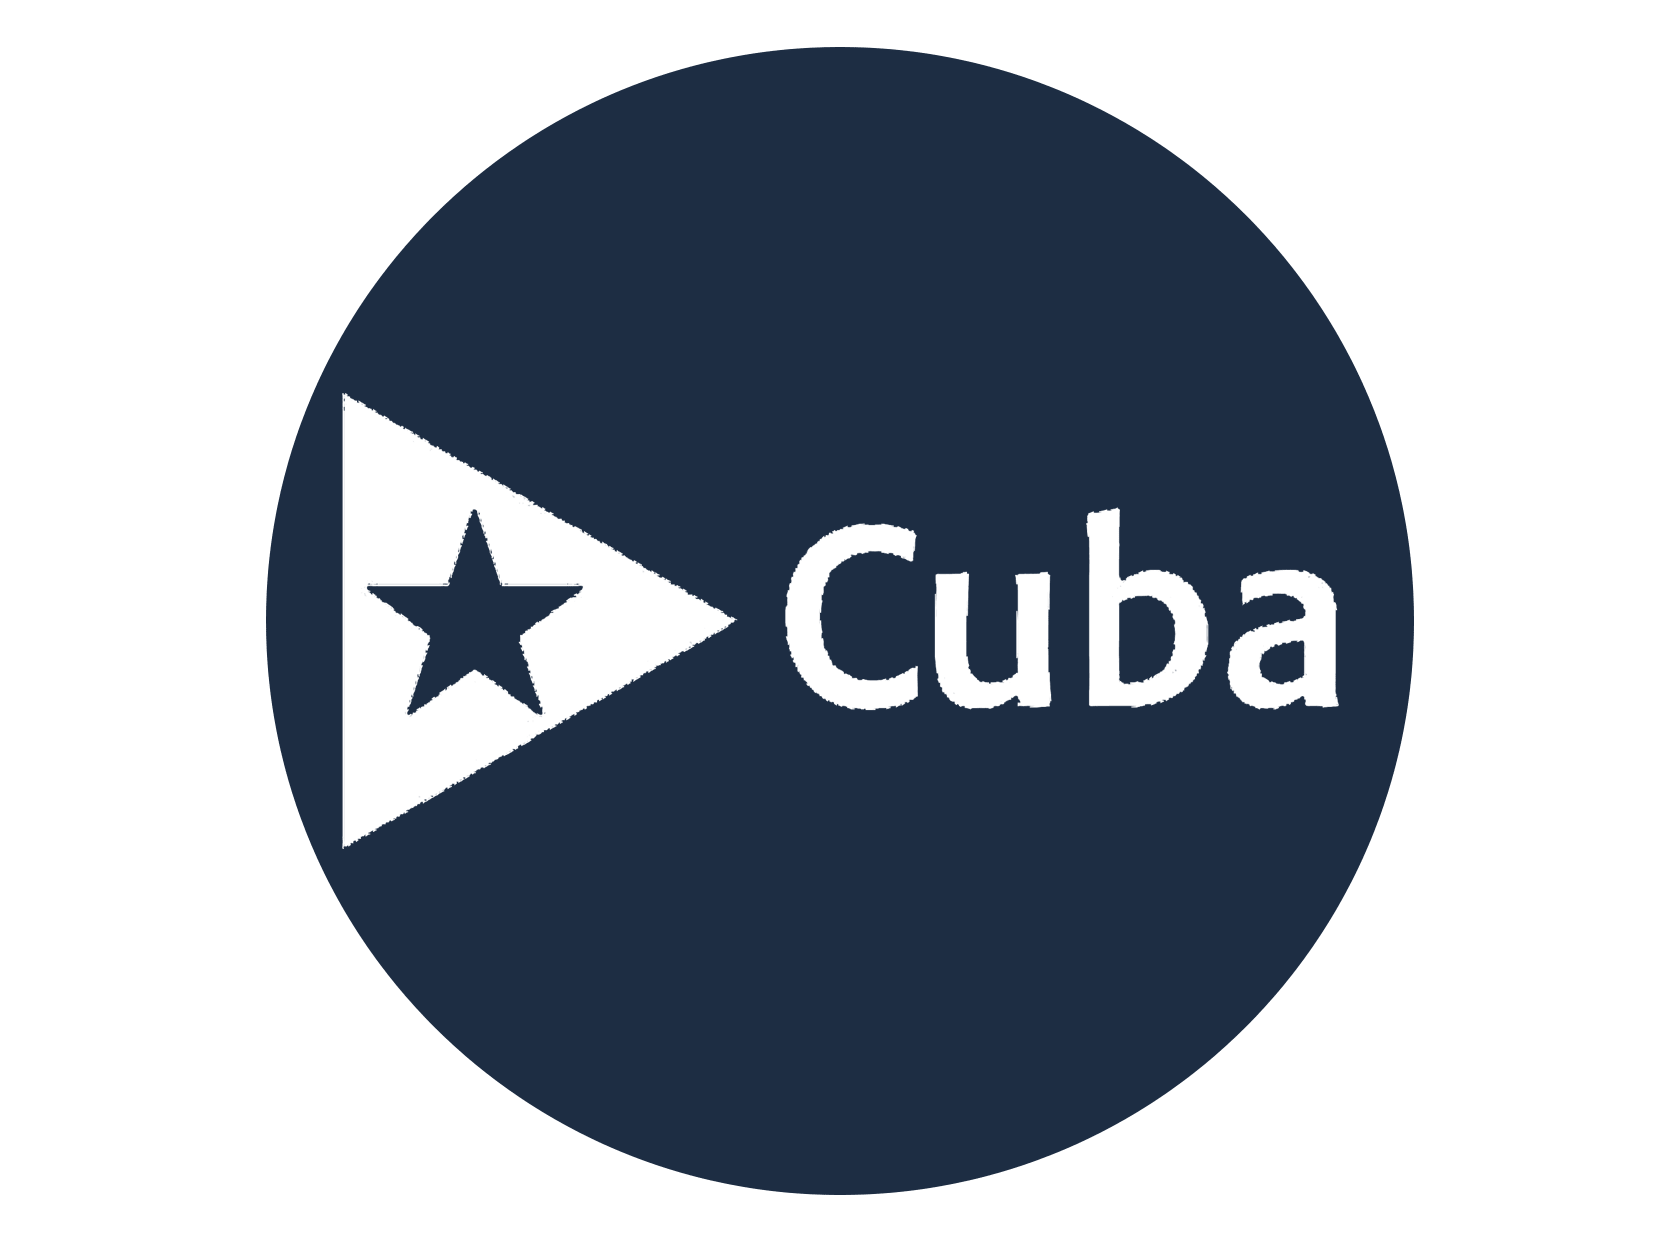 travel cuba logo for mobile billboards